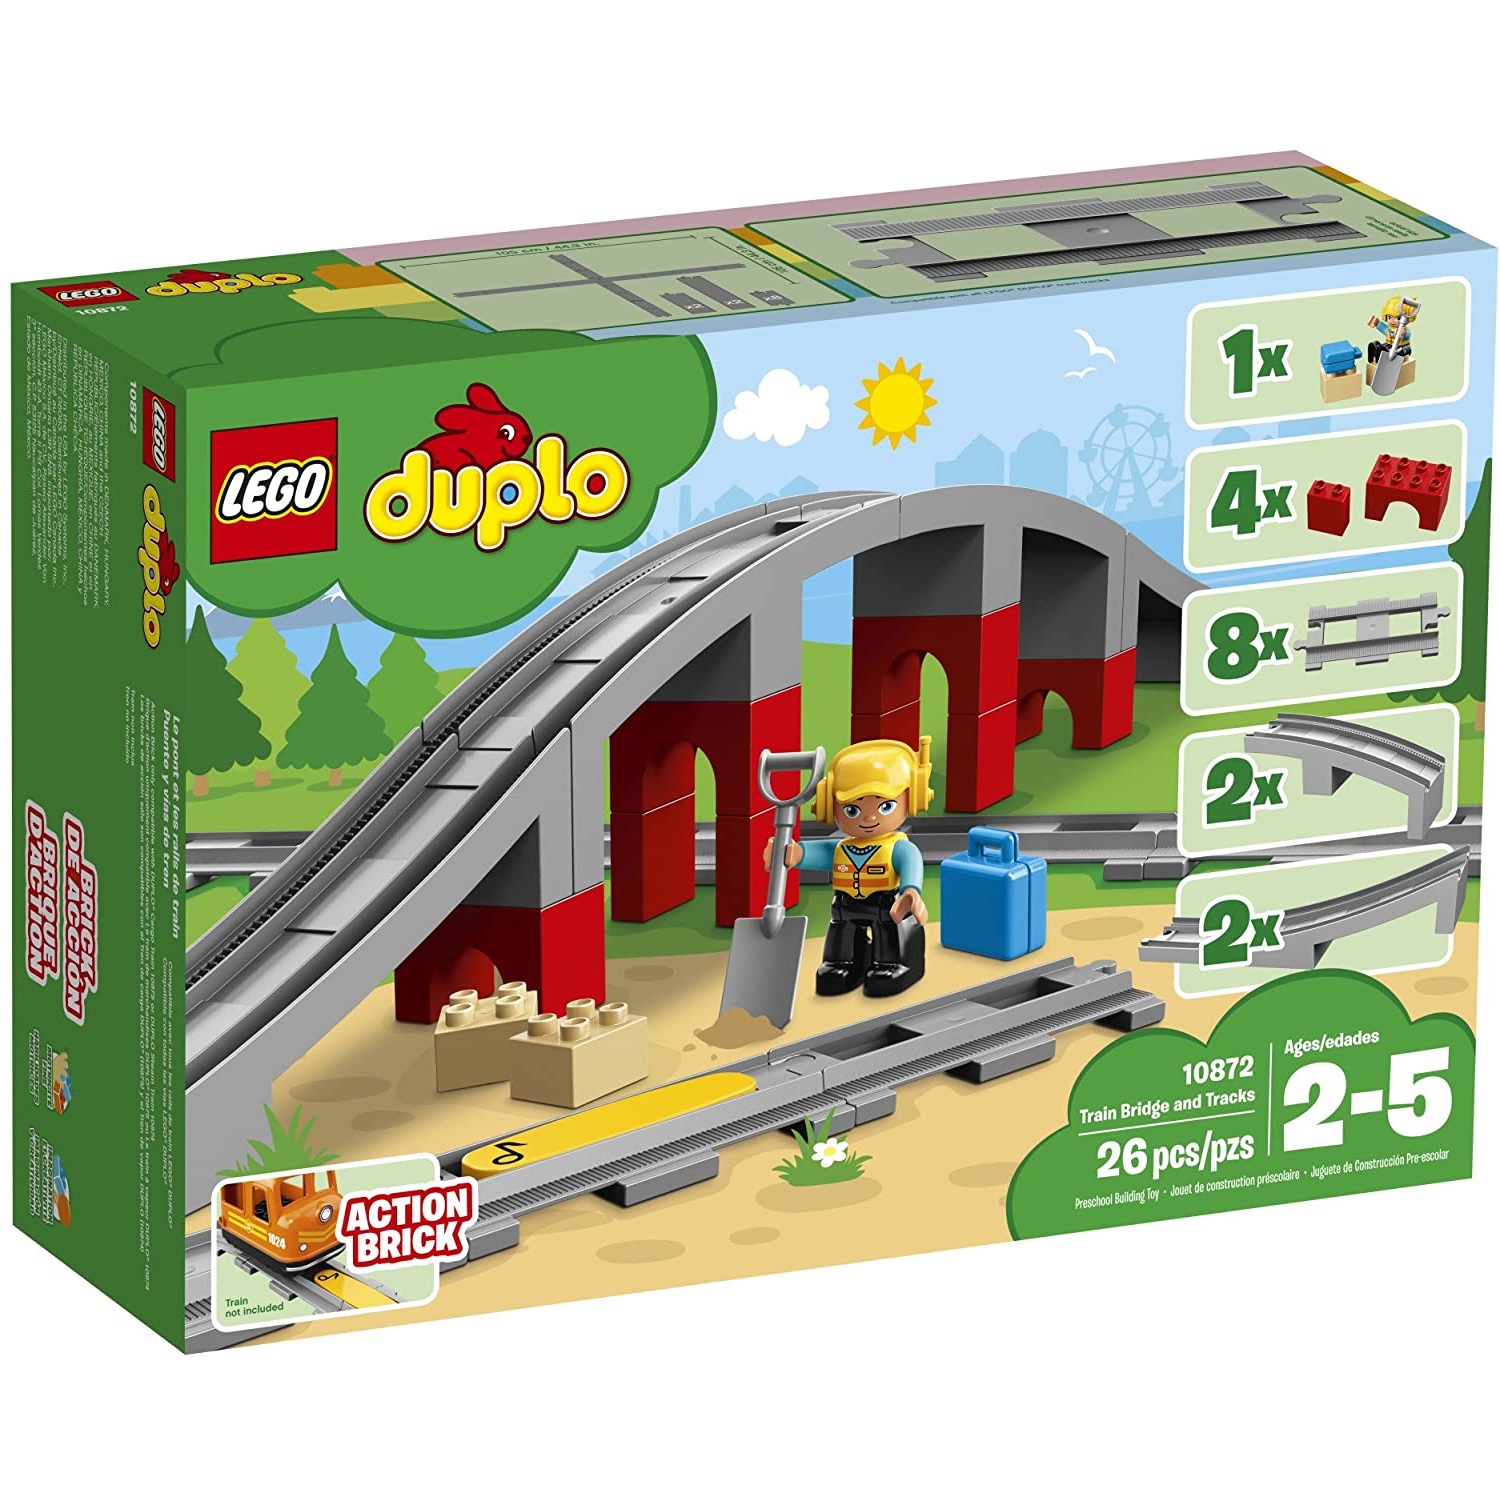 Pod cu sine de cale ferata Lego Duplo, +2 ani, 10872, Lego